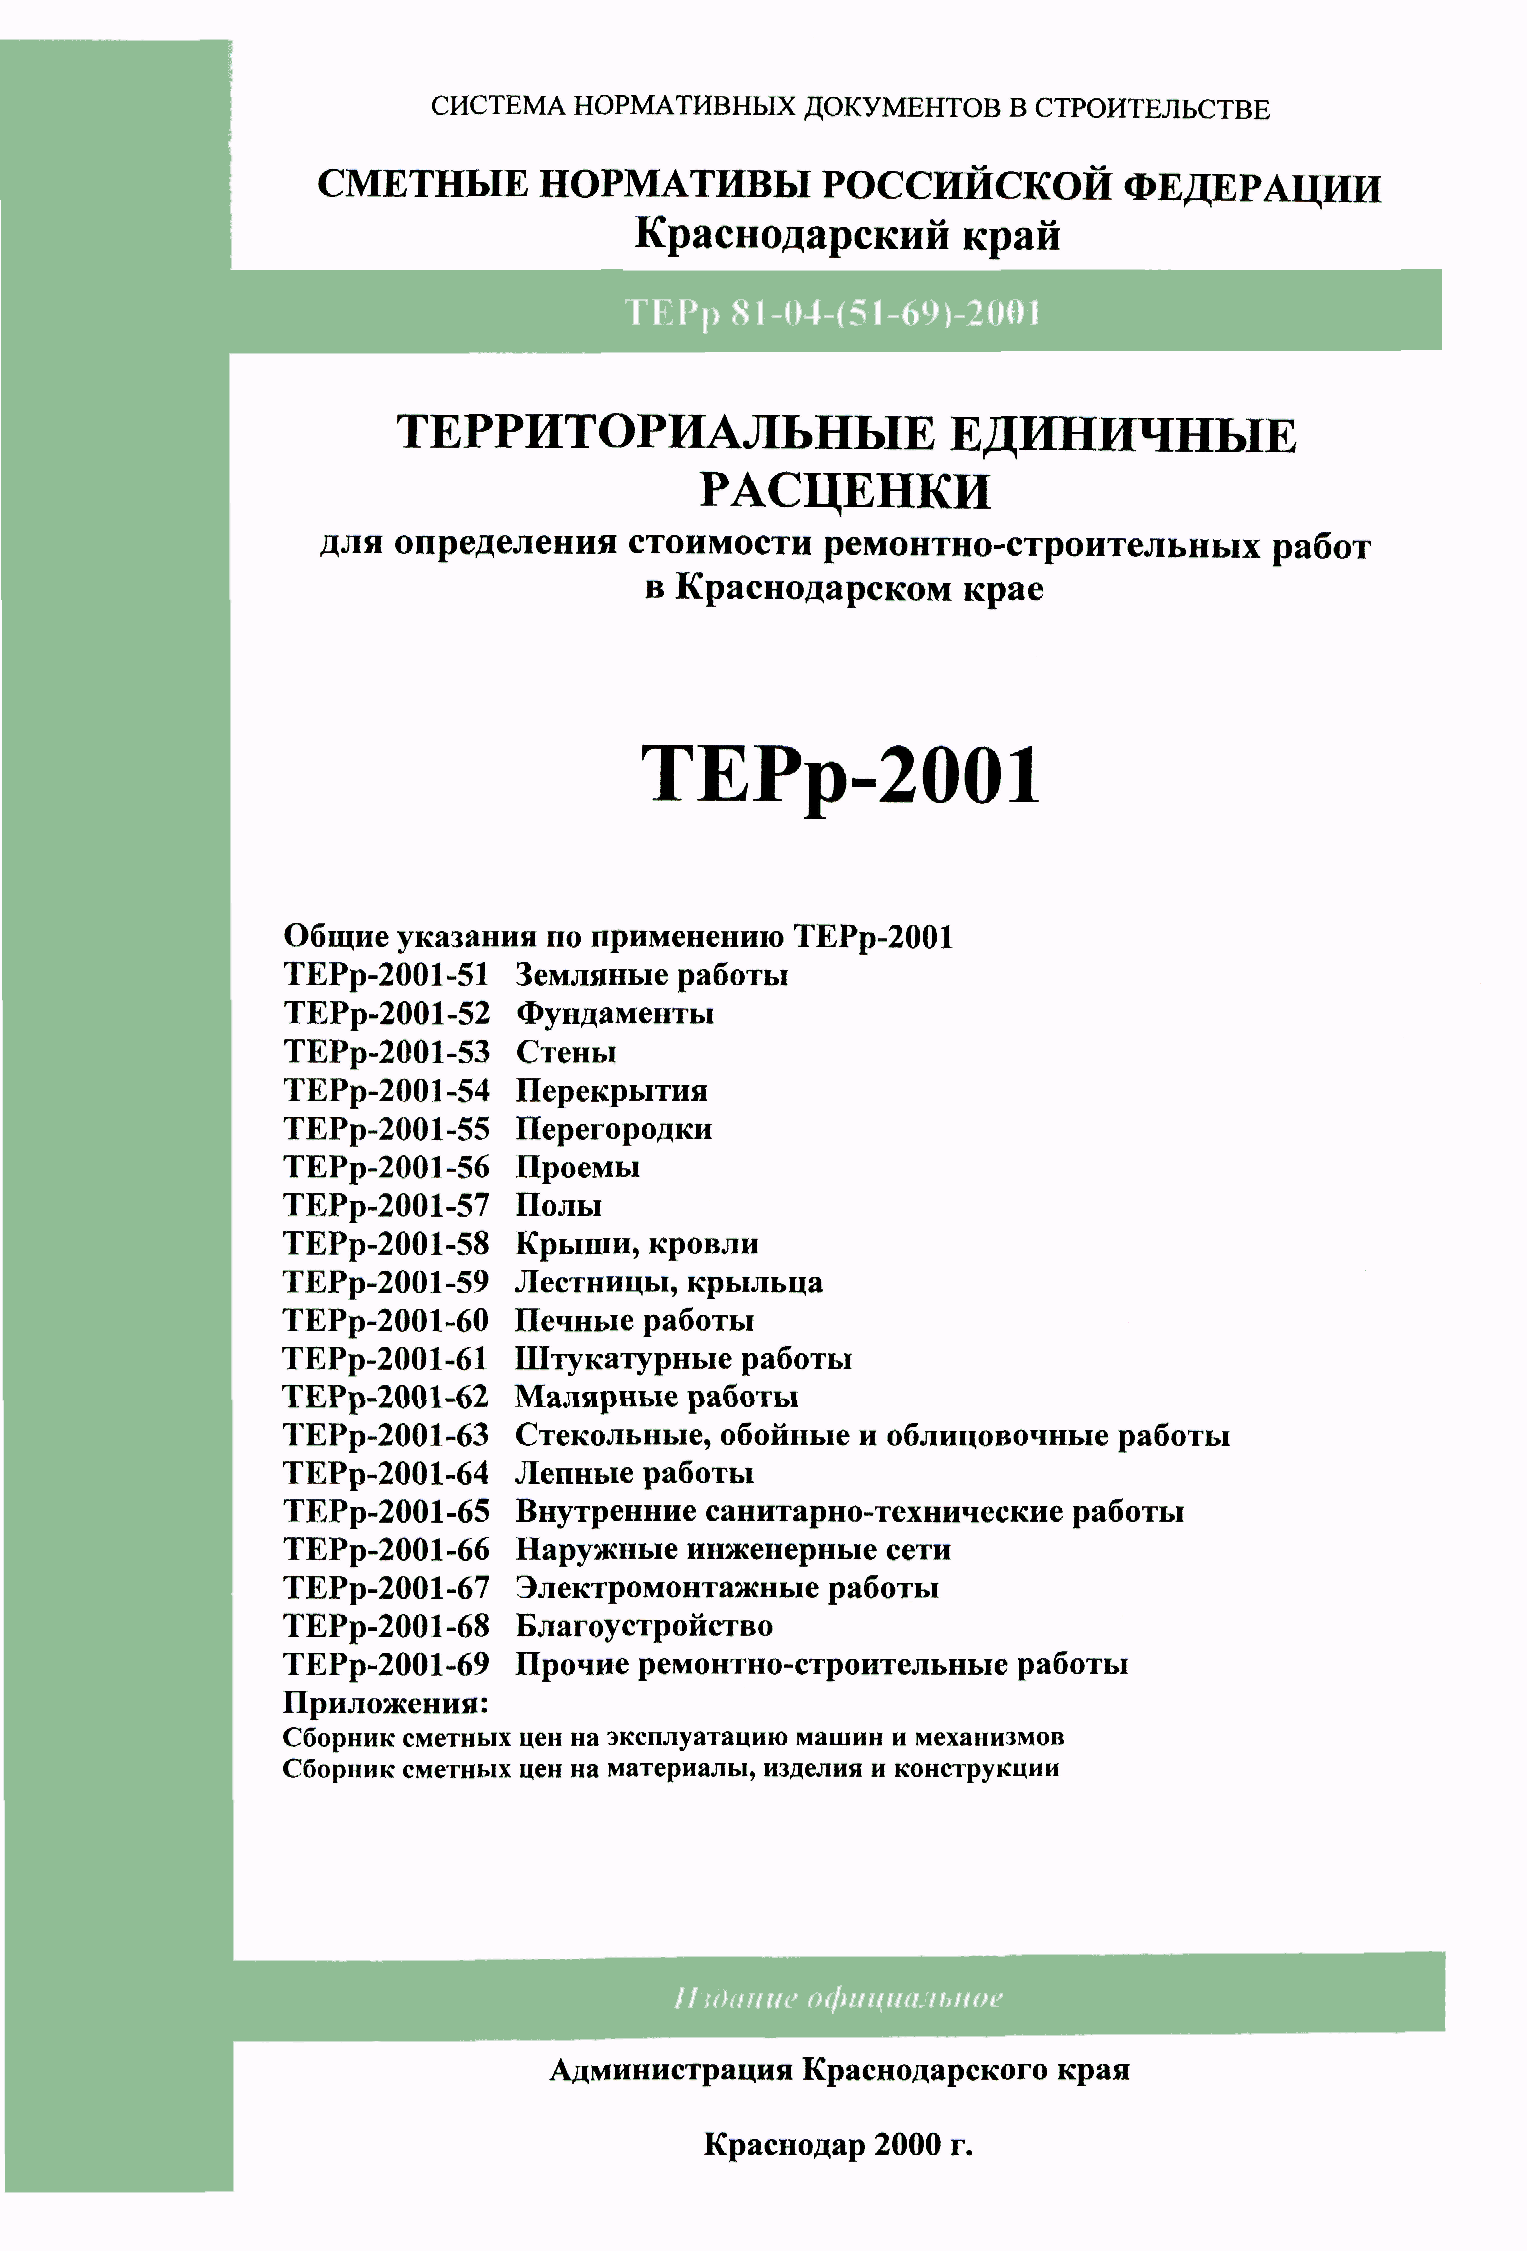 ТЕРр Краснодарский край 2001-52